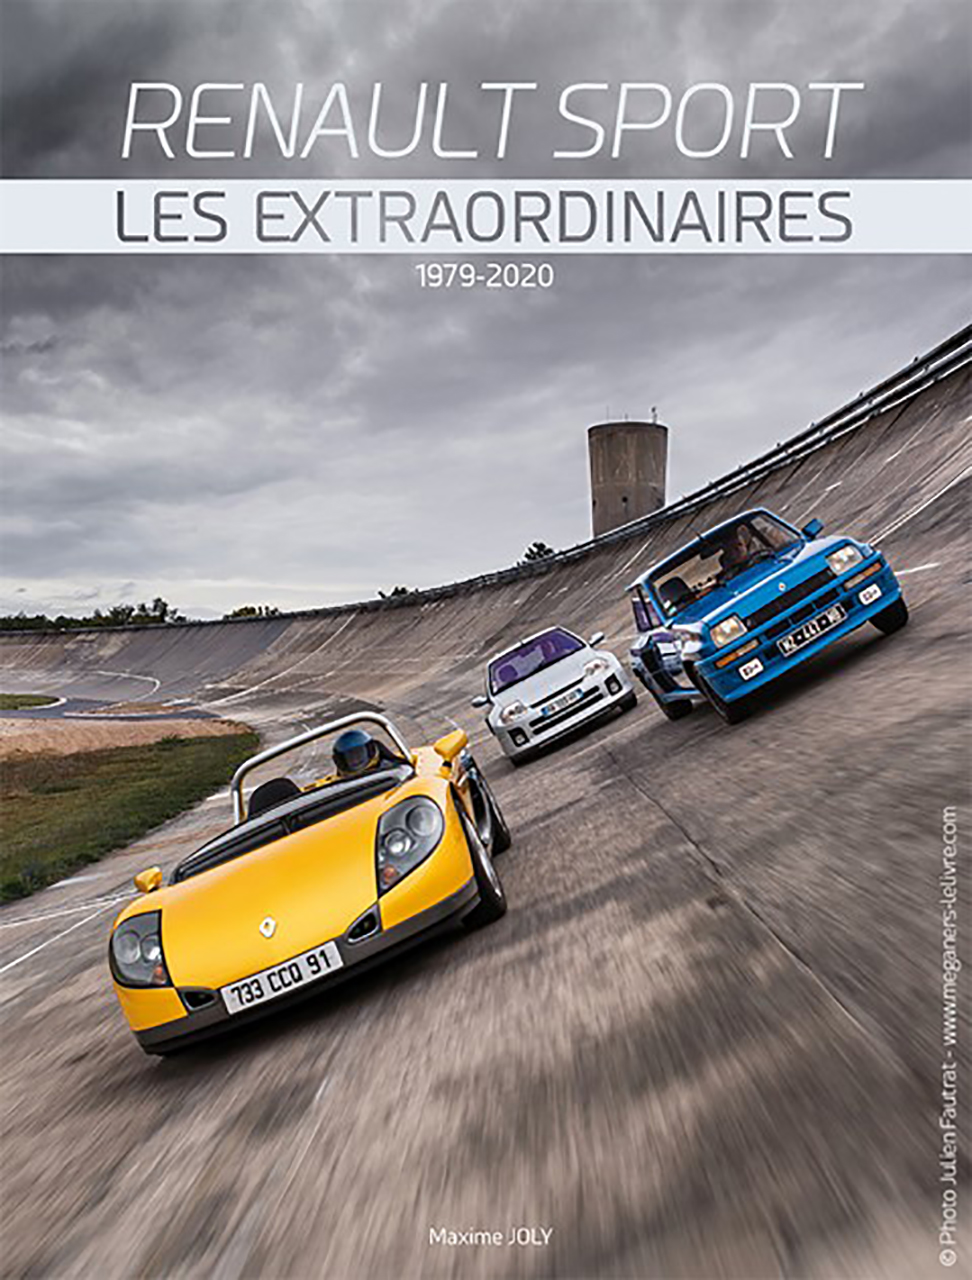 Renault sport les extraordinaires 1980-2020